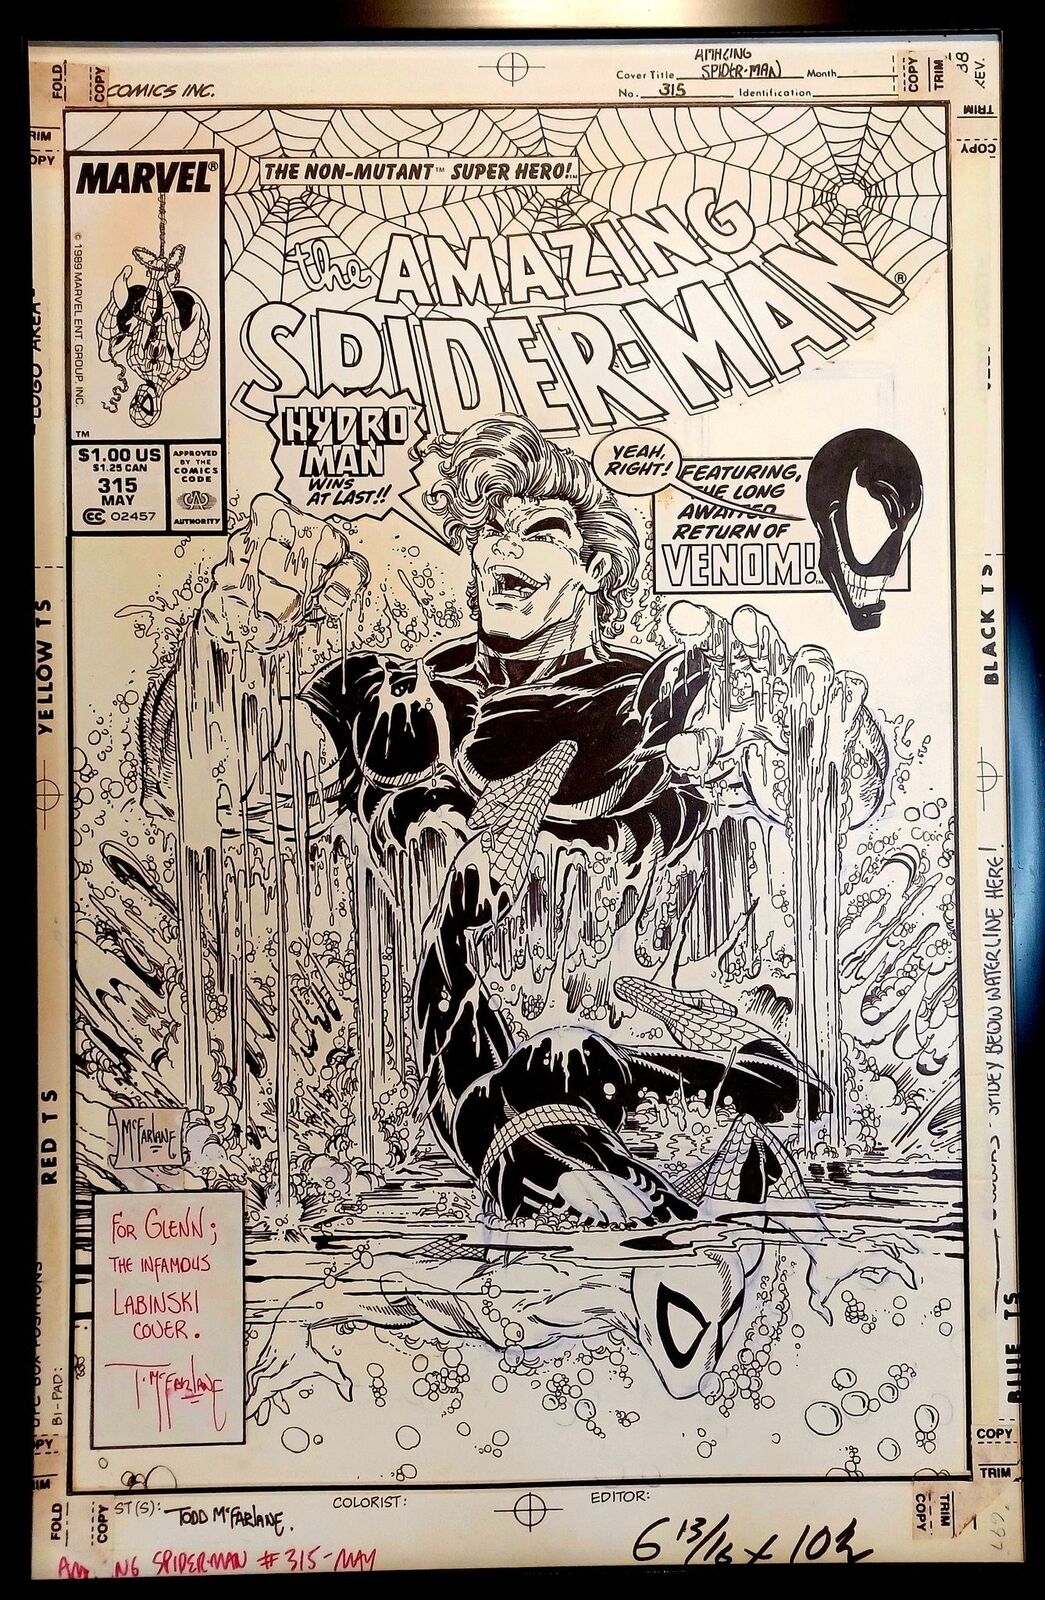 Amazing Spider-Man #315 by Todd McFarlane 11x17 FRAMED Original Art Print Comic 